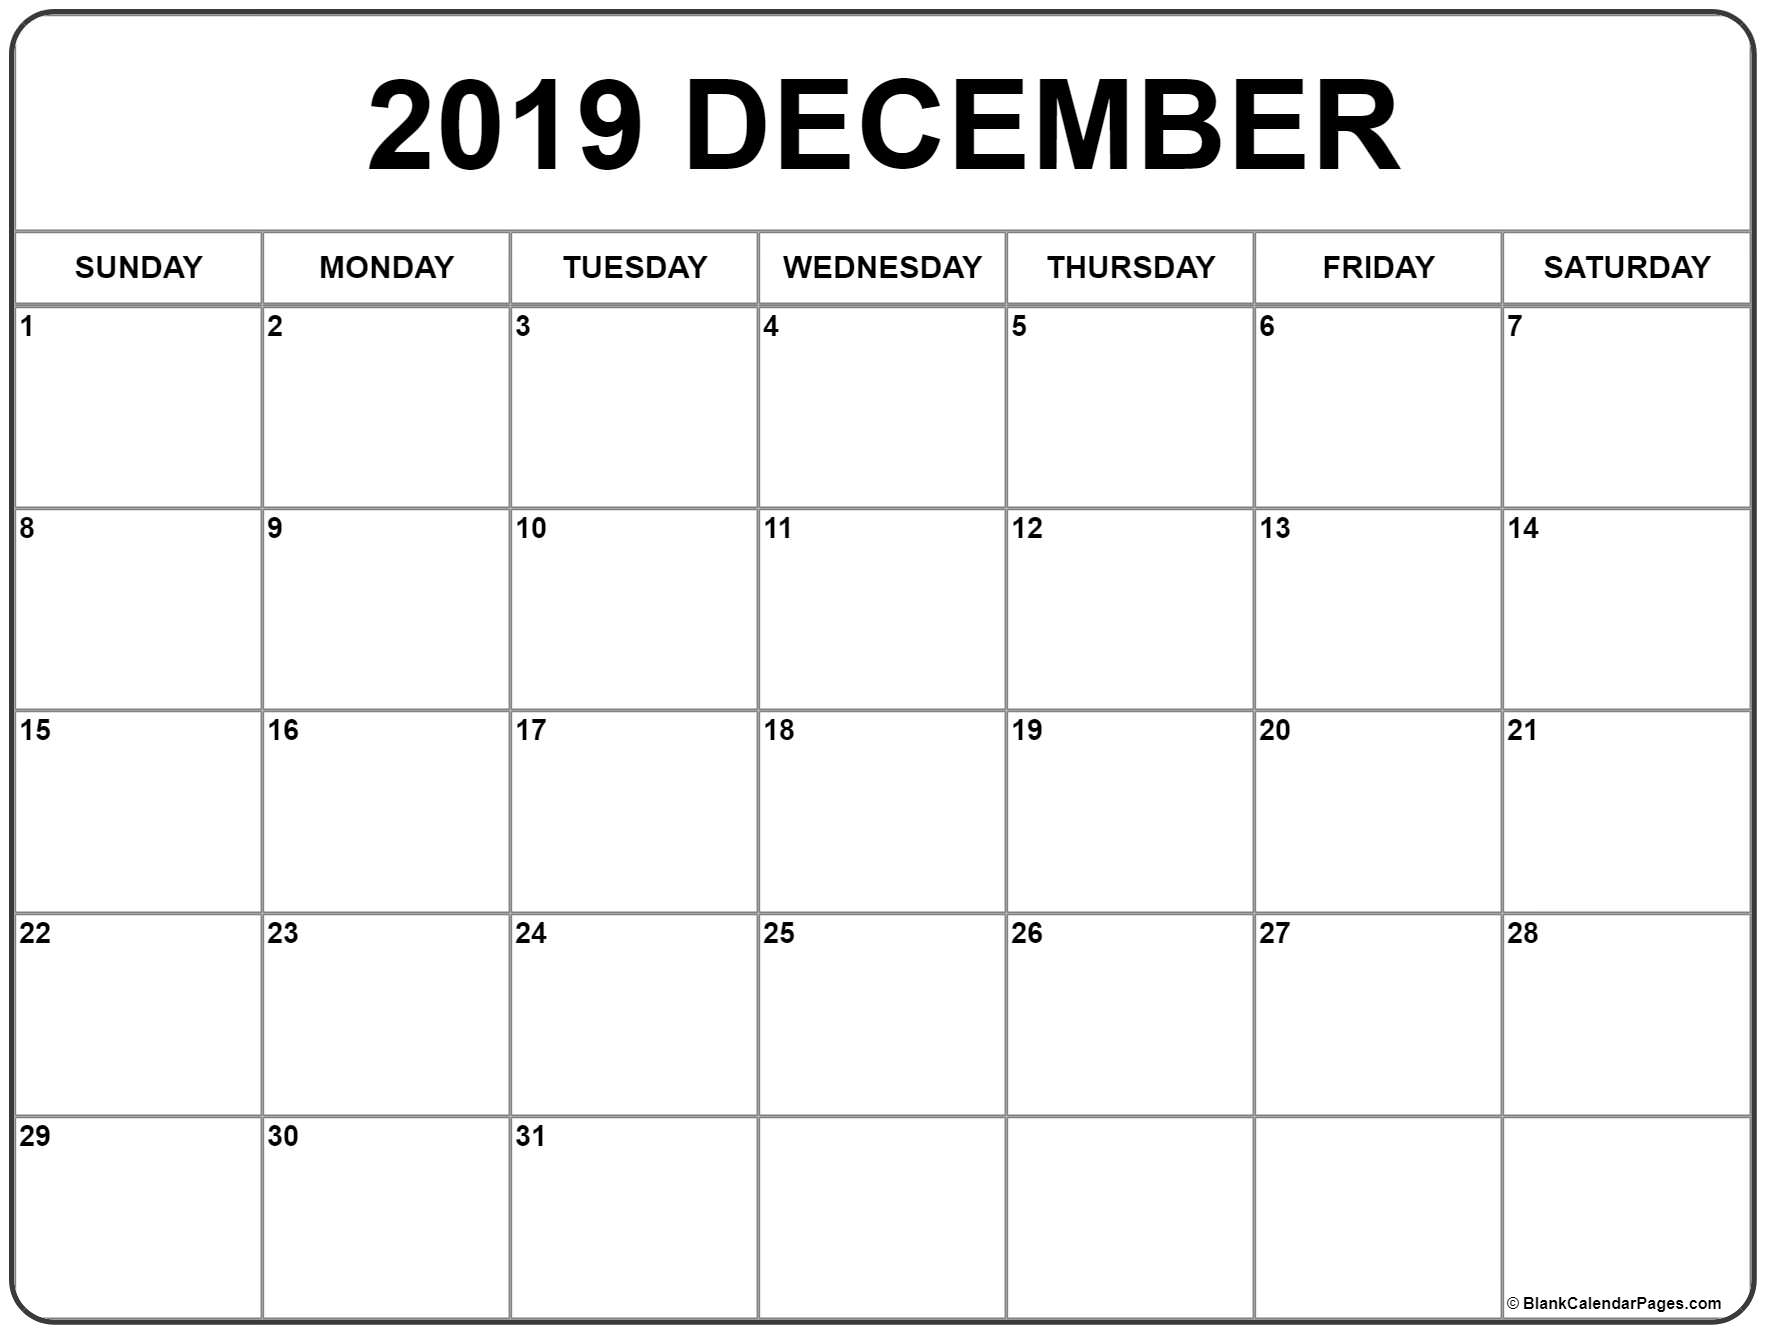 December 2019 Calendar | Free Printable Monthly Calendars